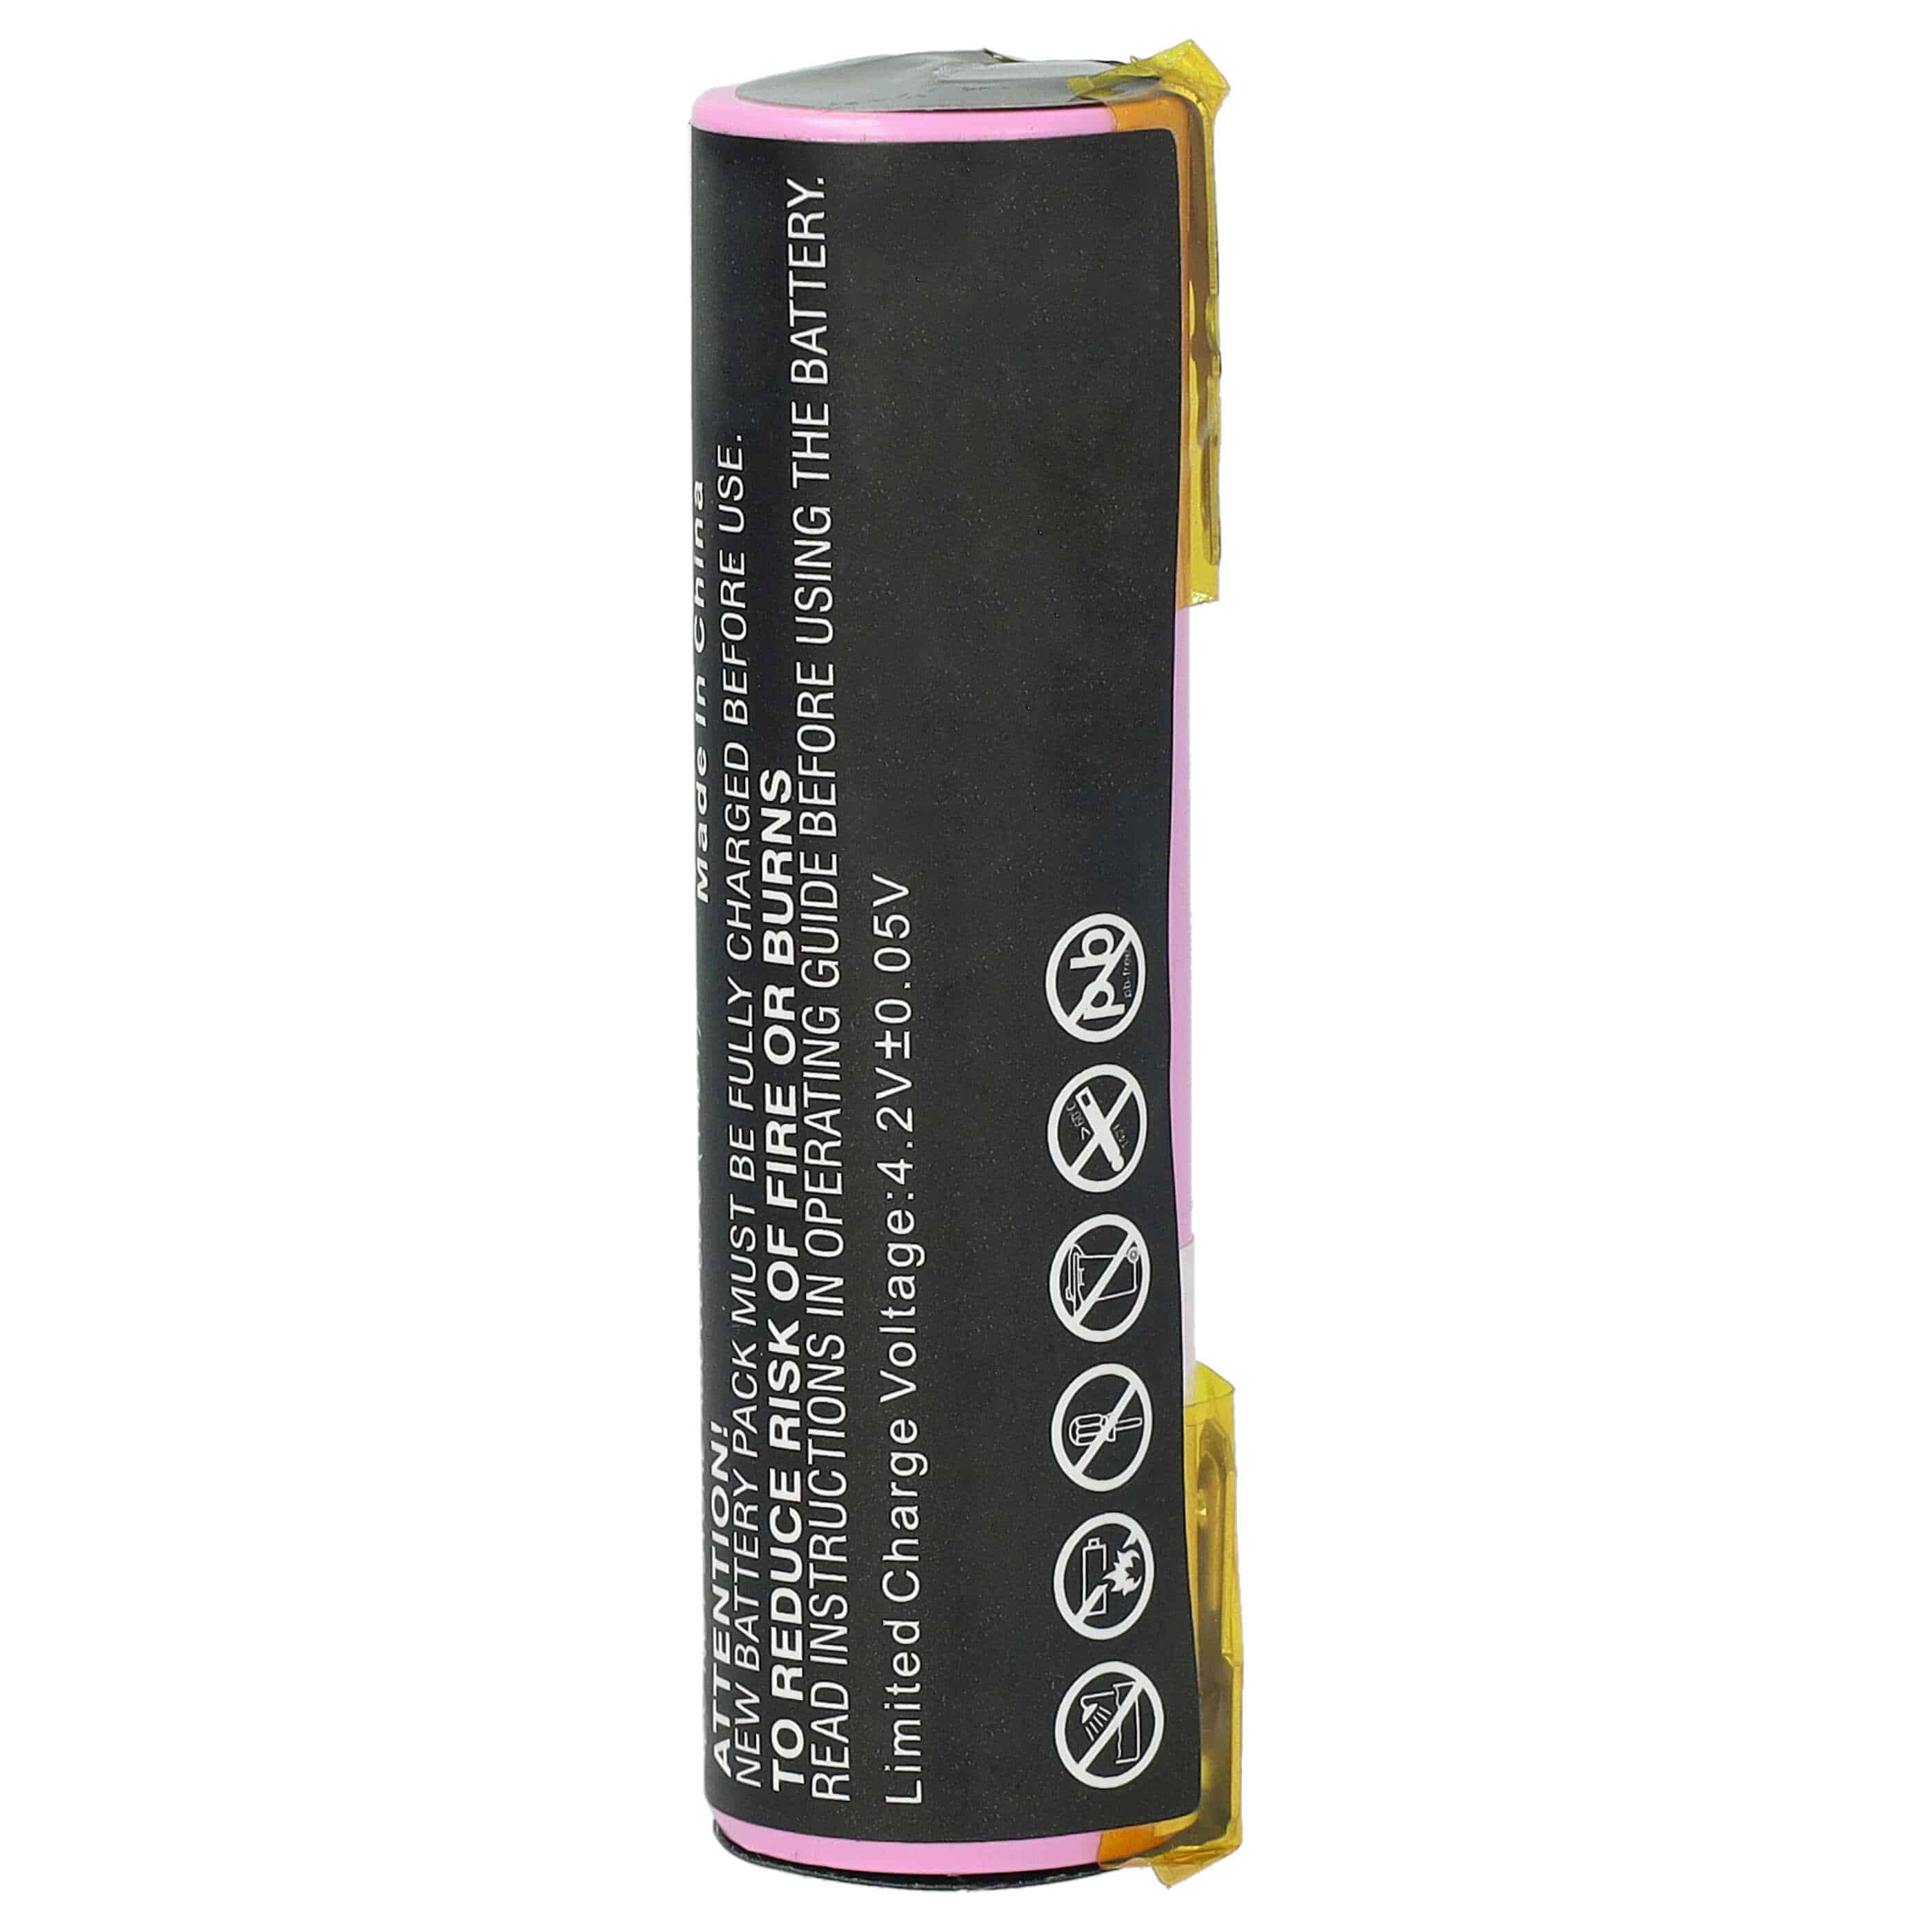 Electric Power Tool Battery Replaces Atika 08829-00.640.00, 08800-000.640.00, 302380 - 2900 mAh, 3.7 V, Li-Ion